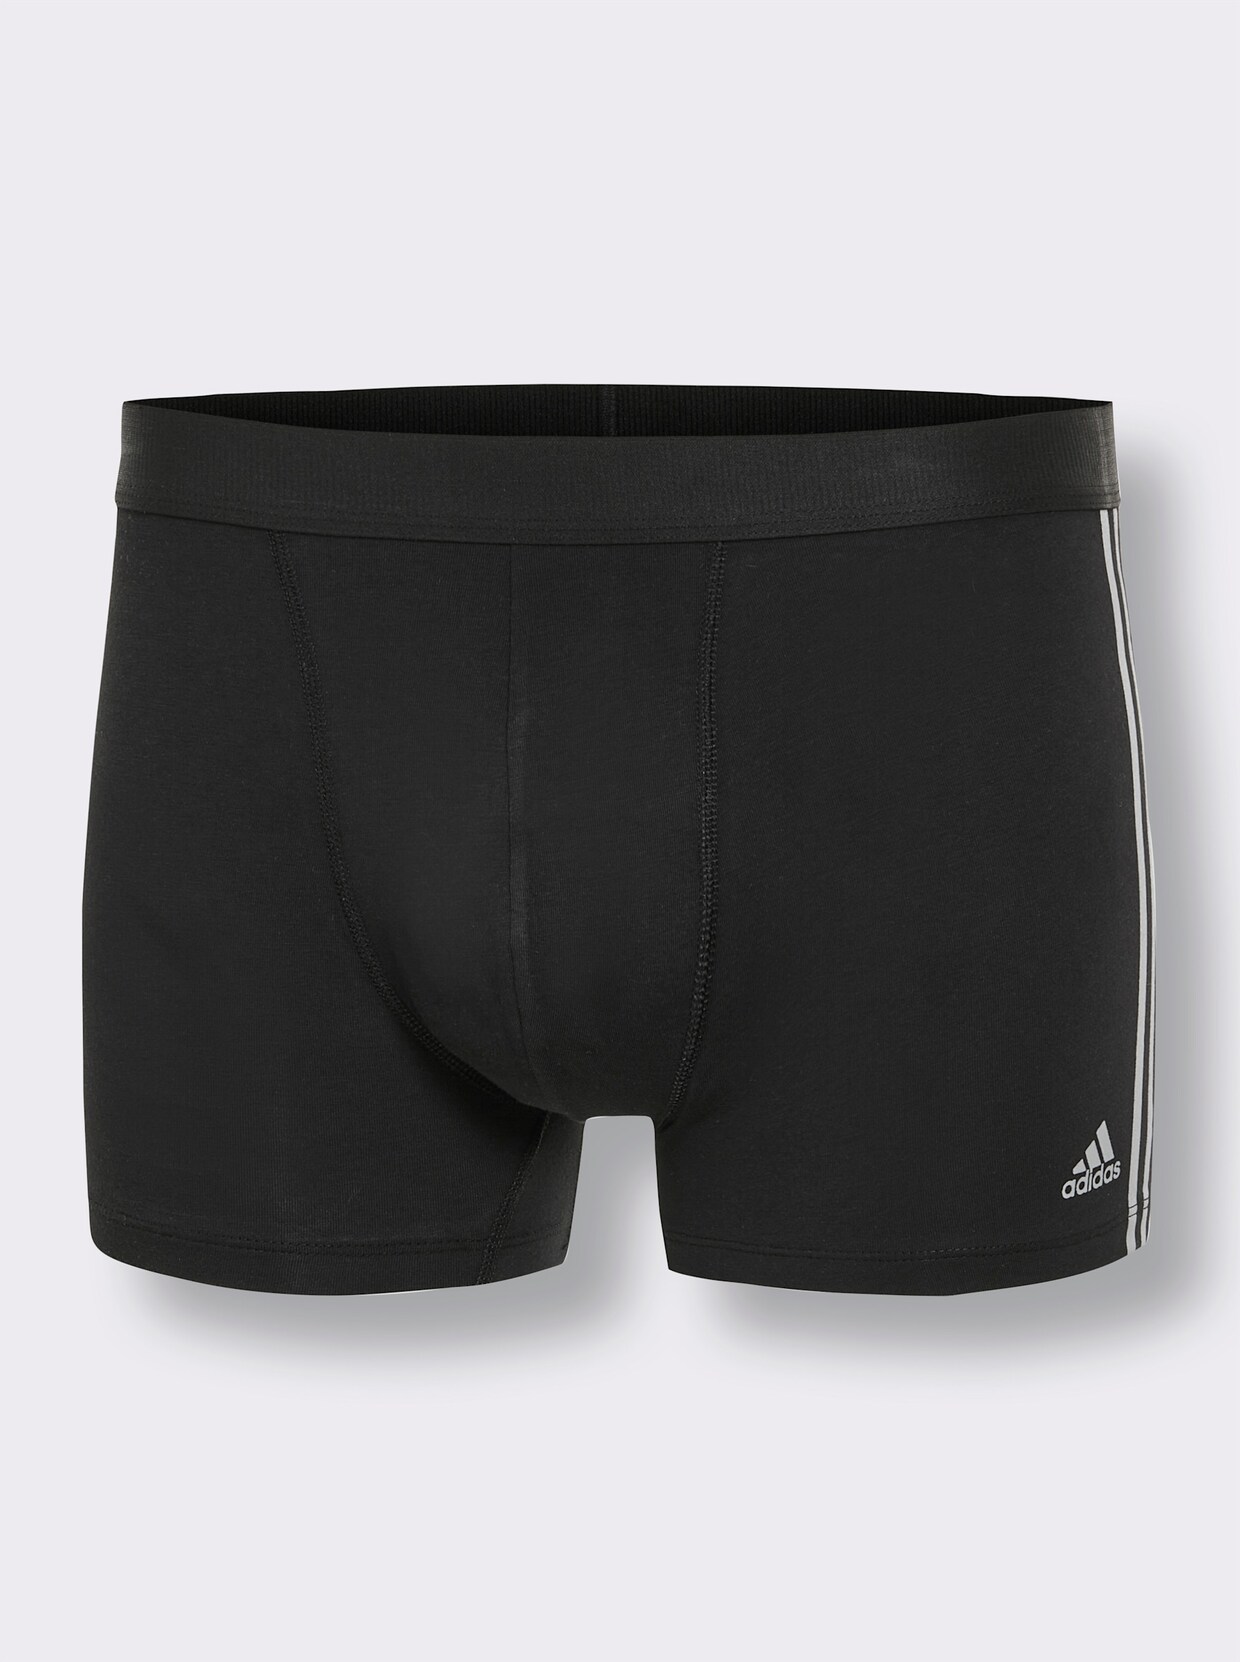 Adidas Pants - weiss + grau + schwarz